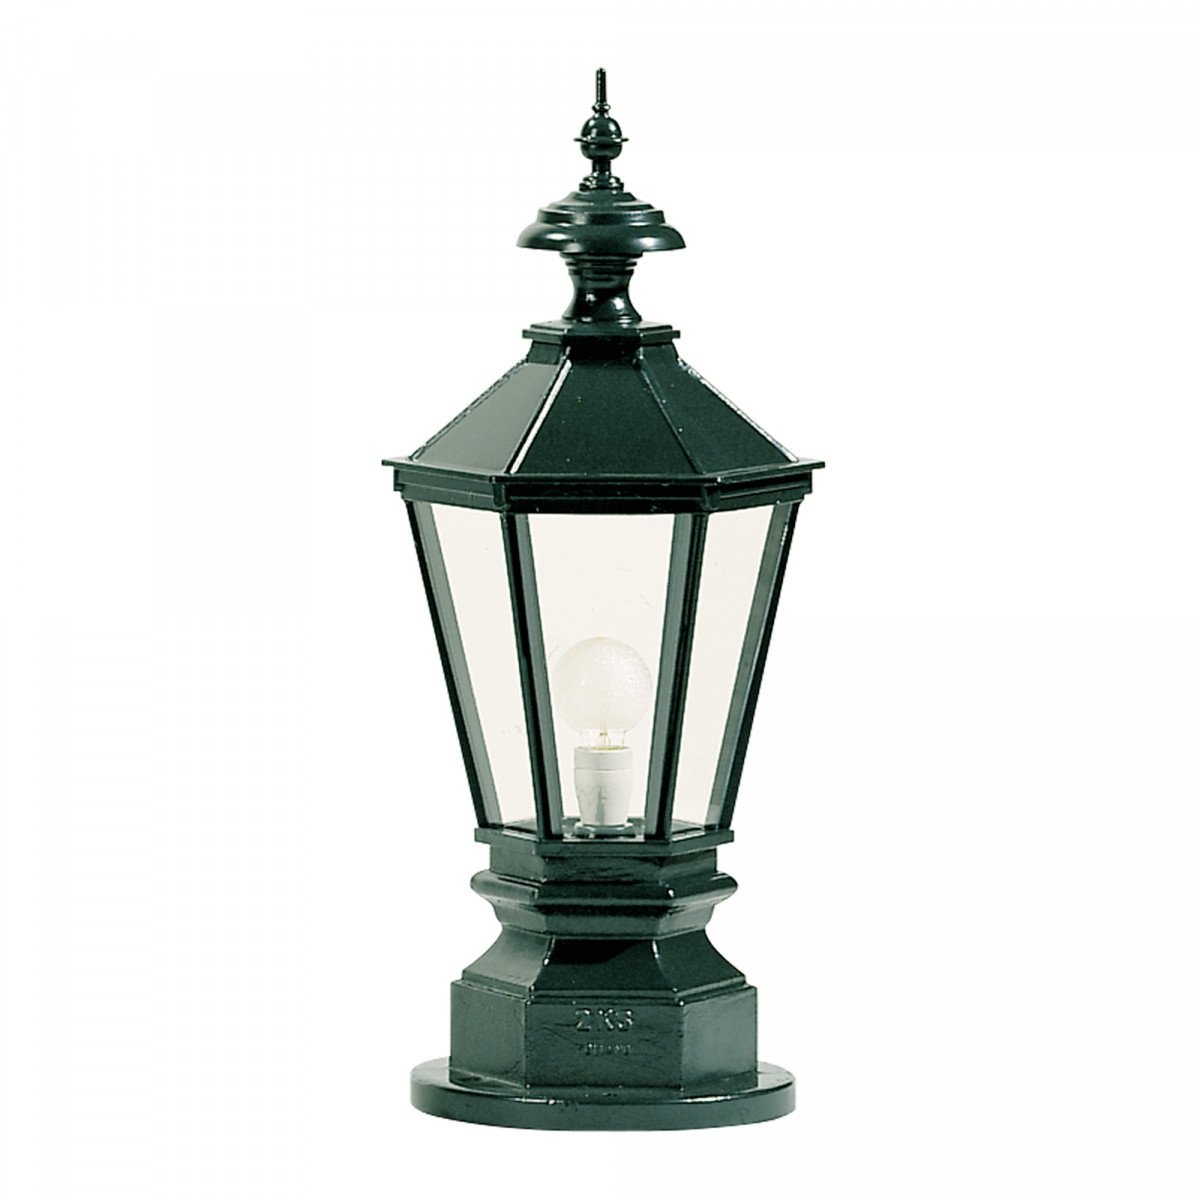 Lampe de jardin York S (1807) (K7C) de KS Lighting avec lanterne hexagonale